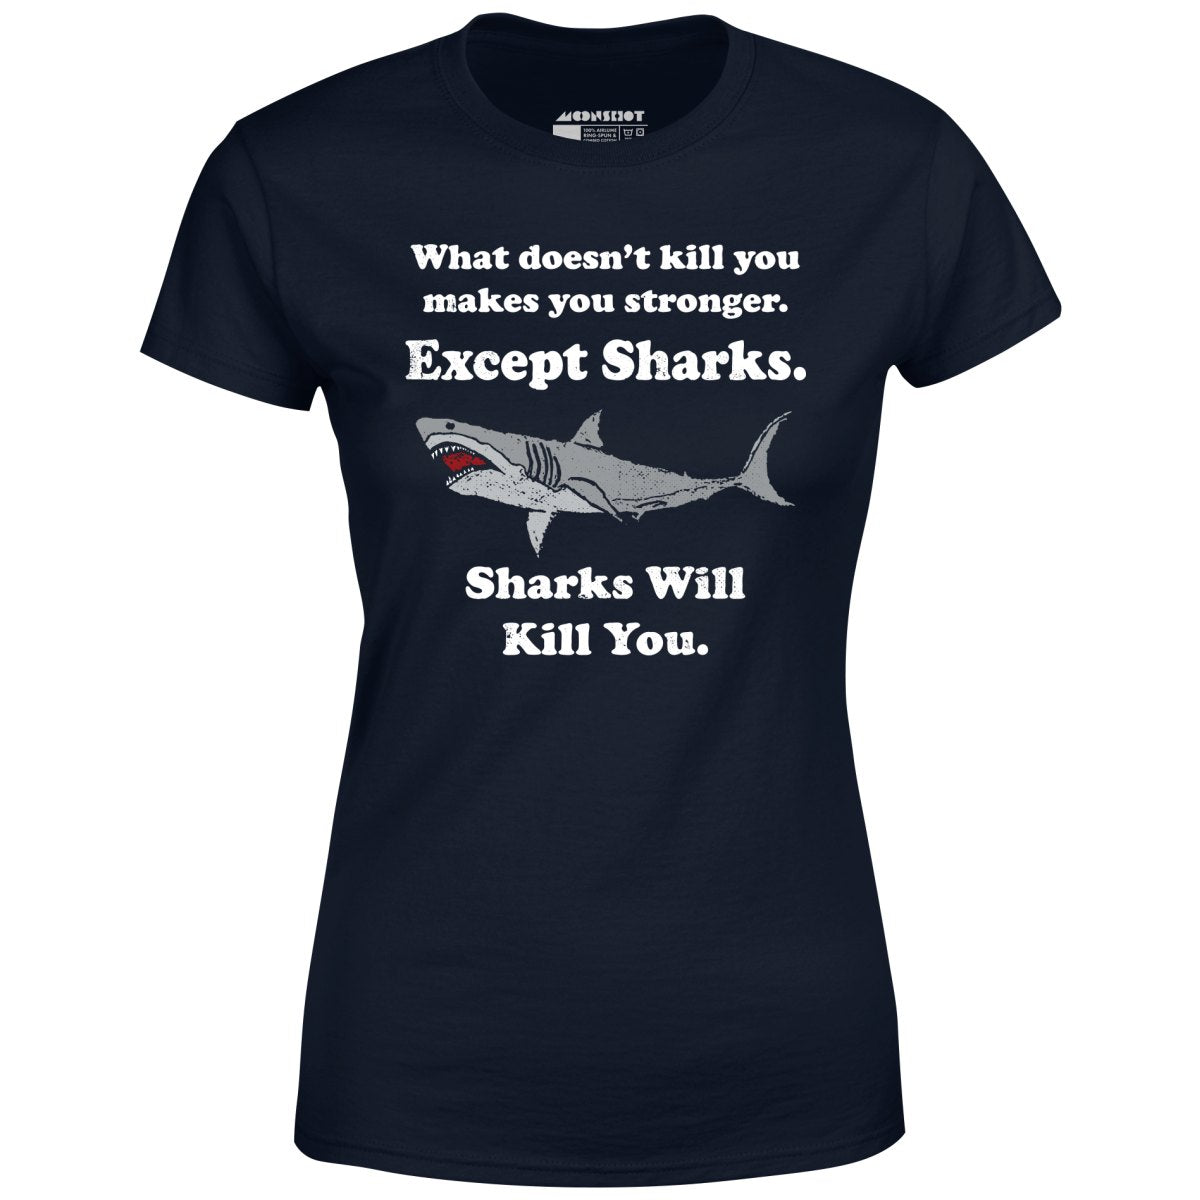 Sharks Will Kill You - Women's T-Shirt